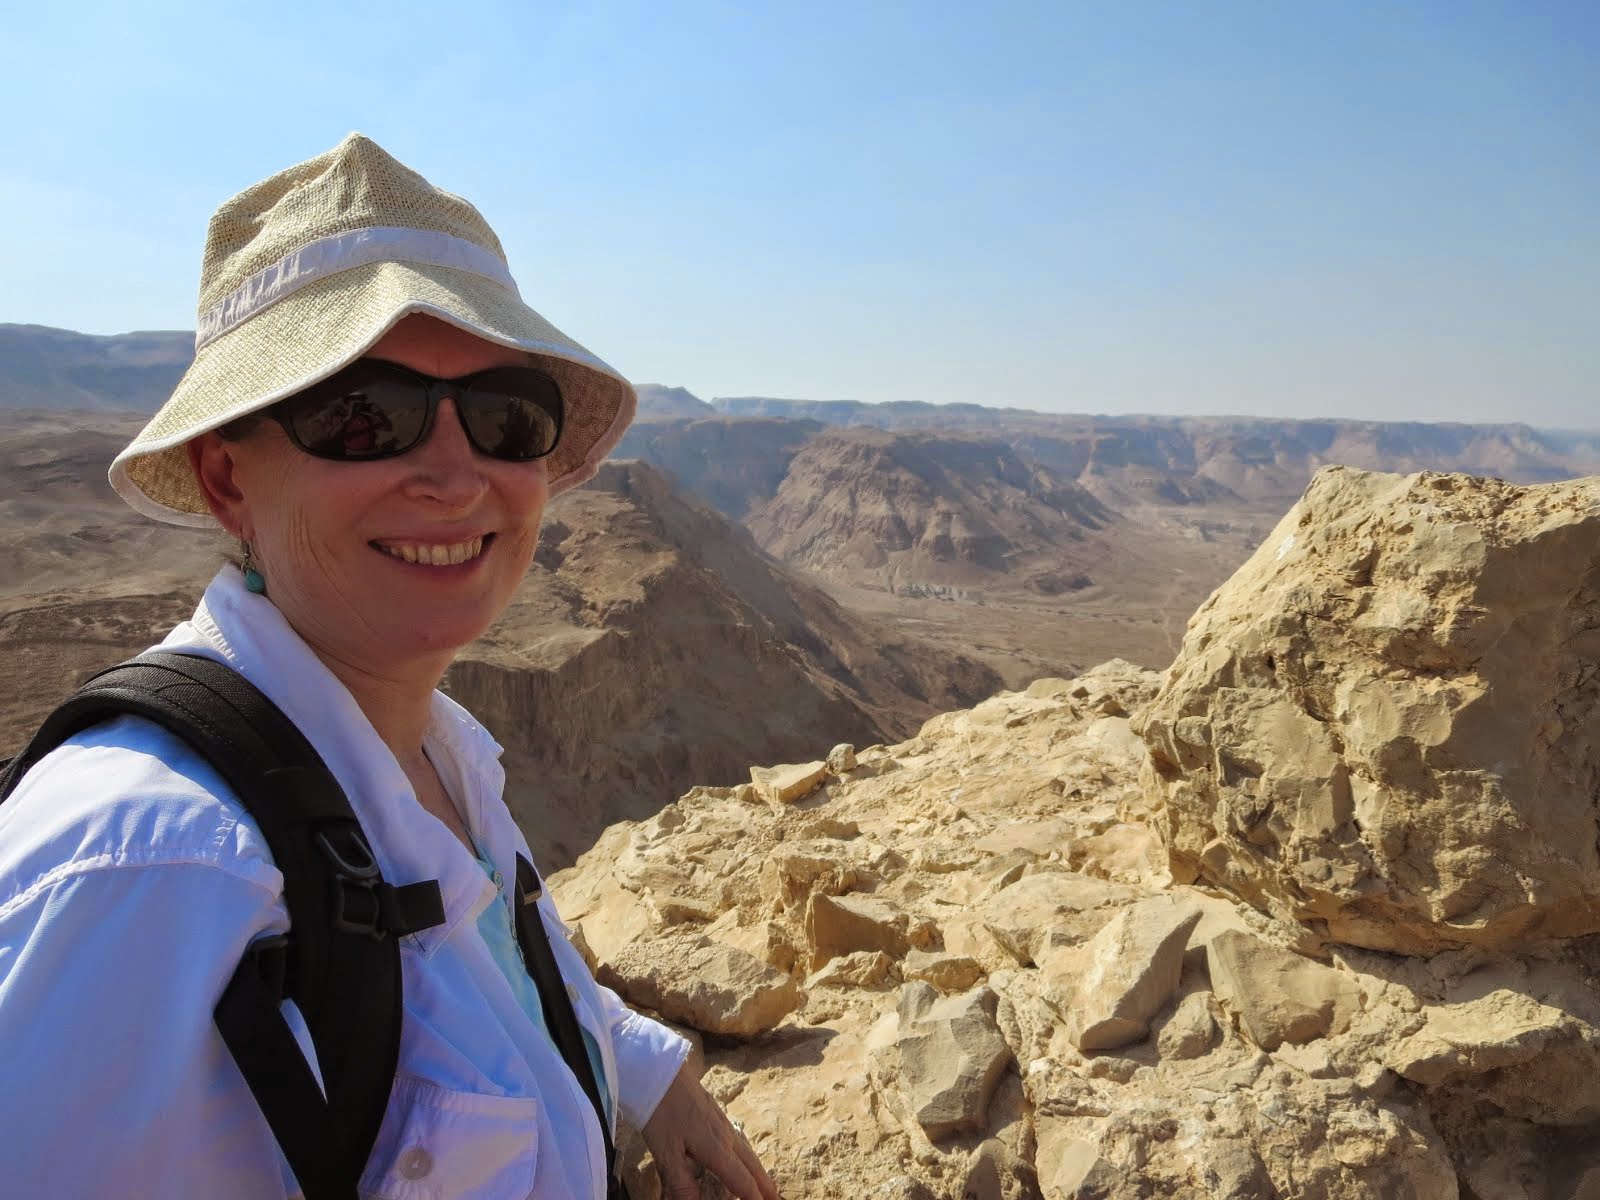 At Masada, Judean Desert